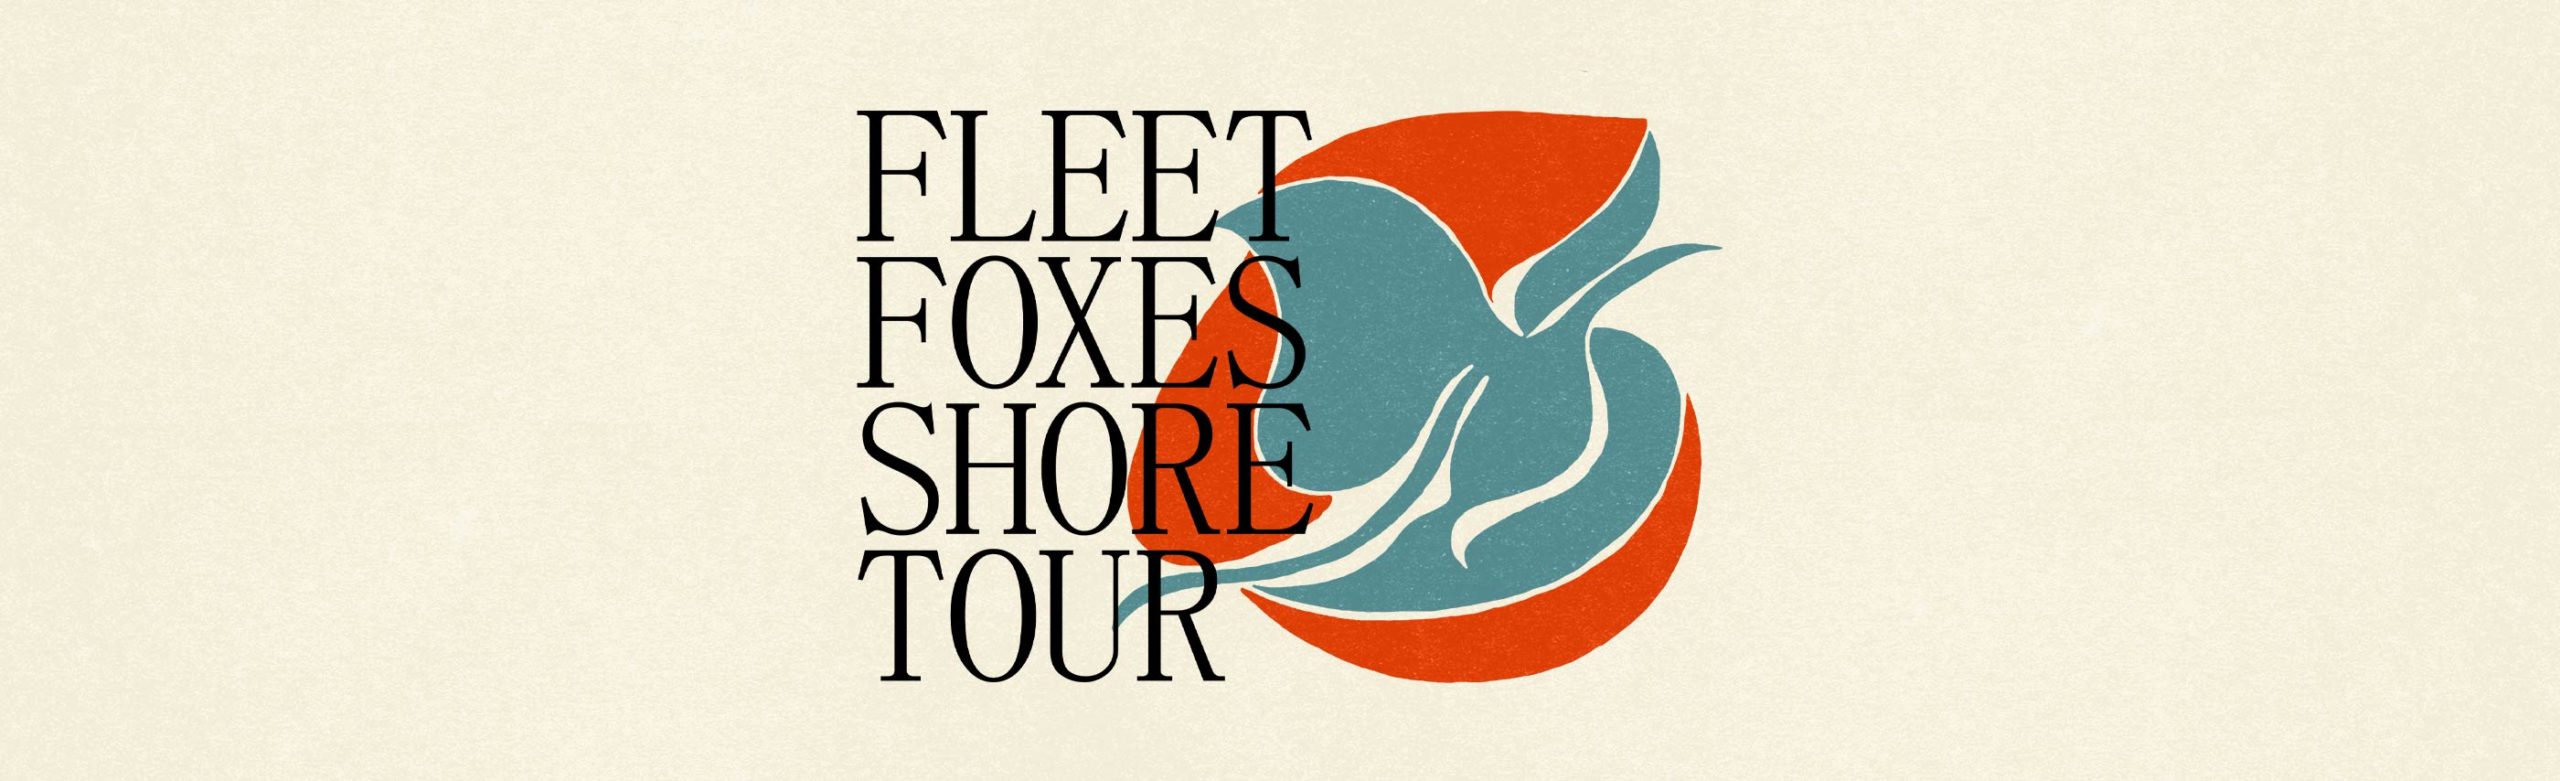 Event Info: Fleet Foxes at KettleHouse Amphitheater 2022 Image